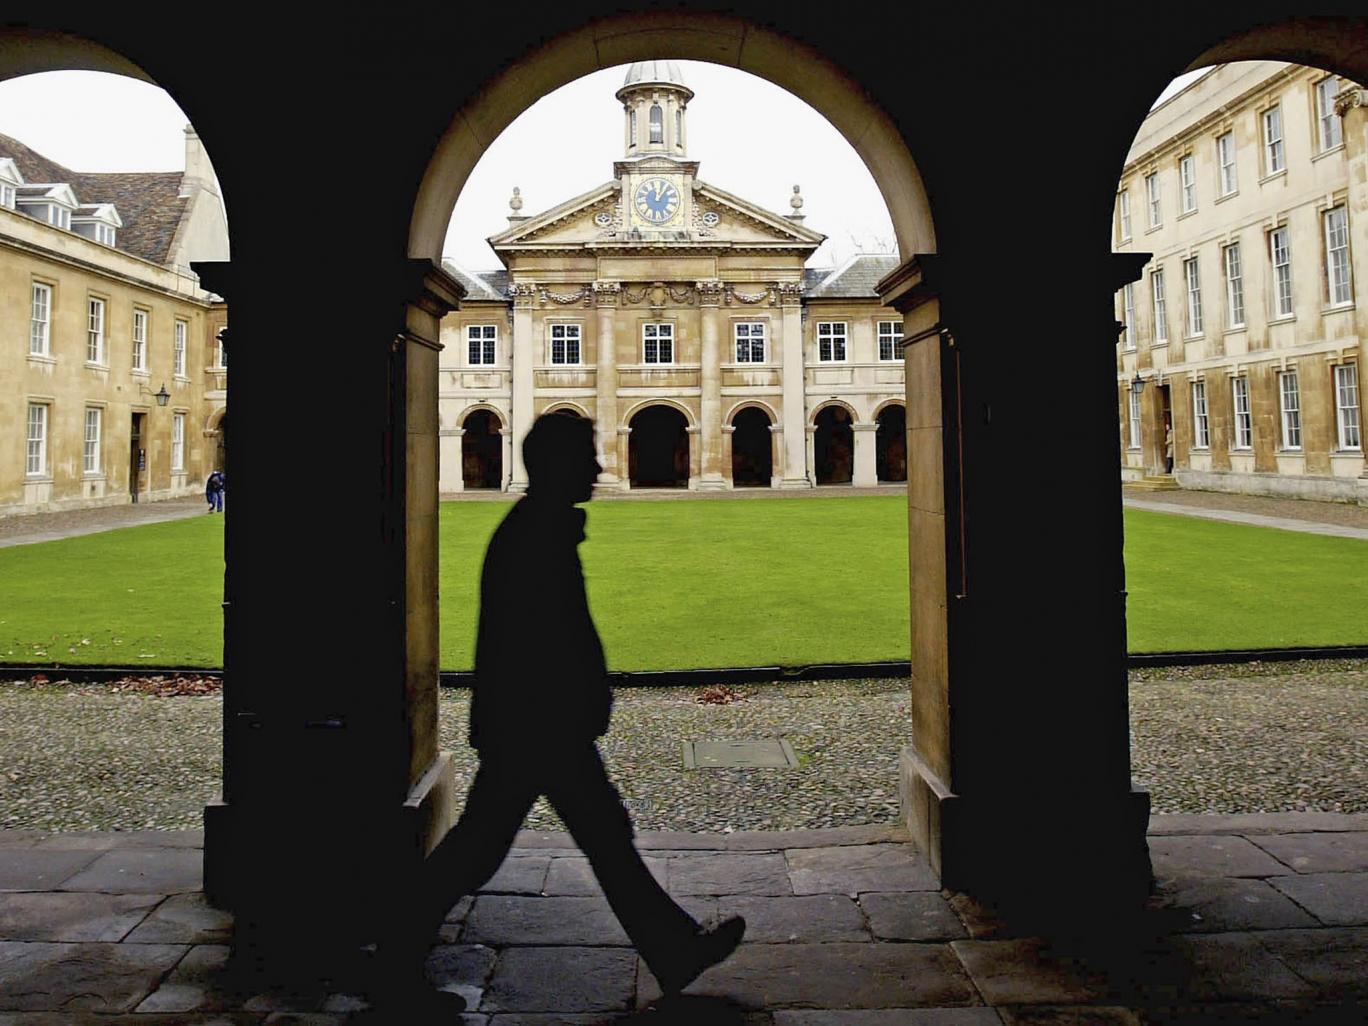 Cambridge University, pictured